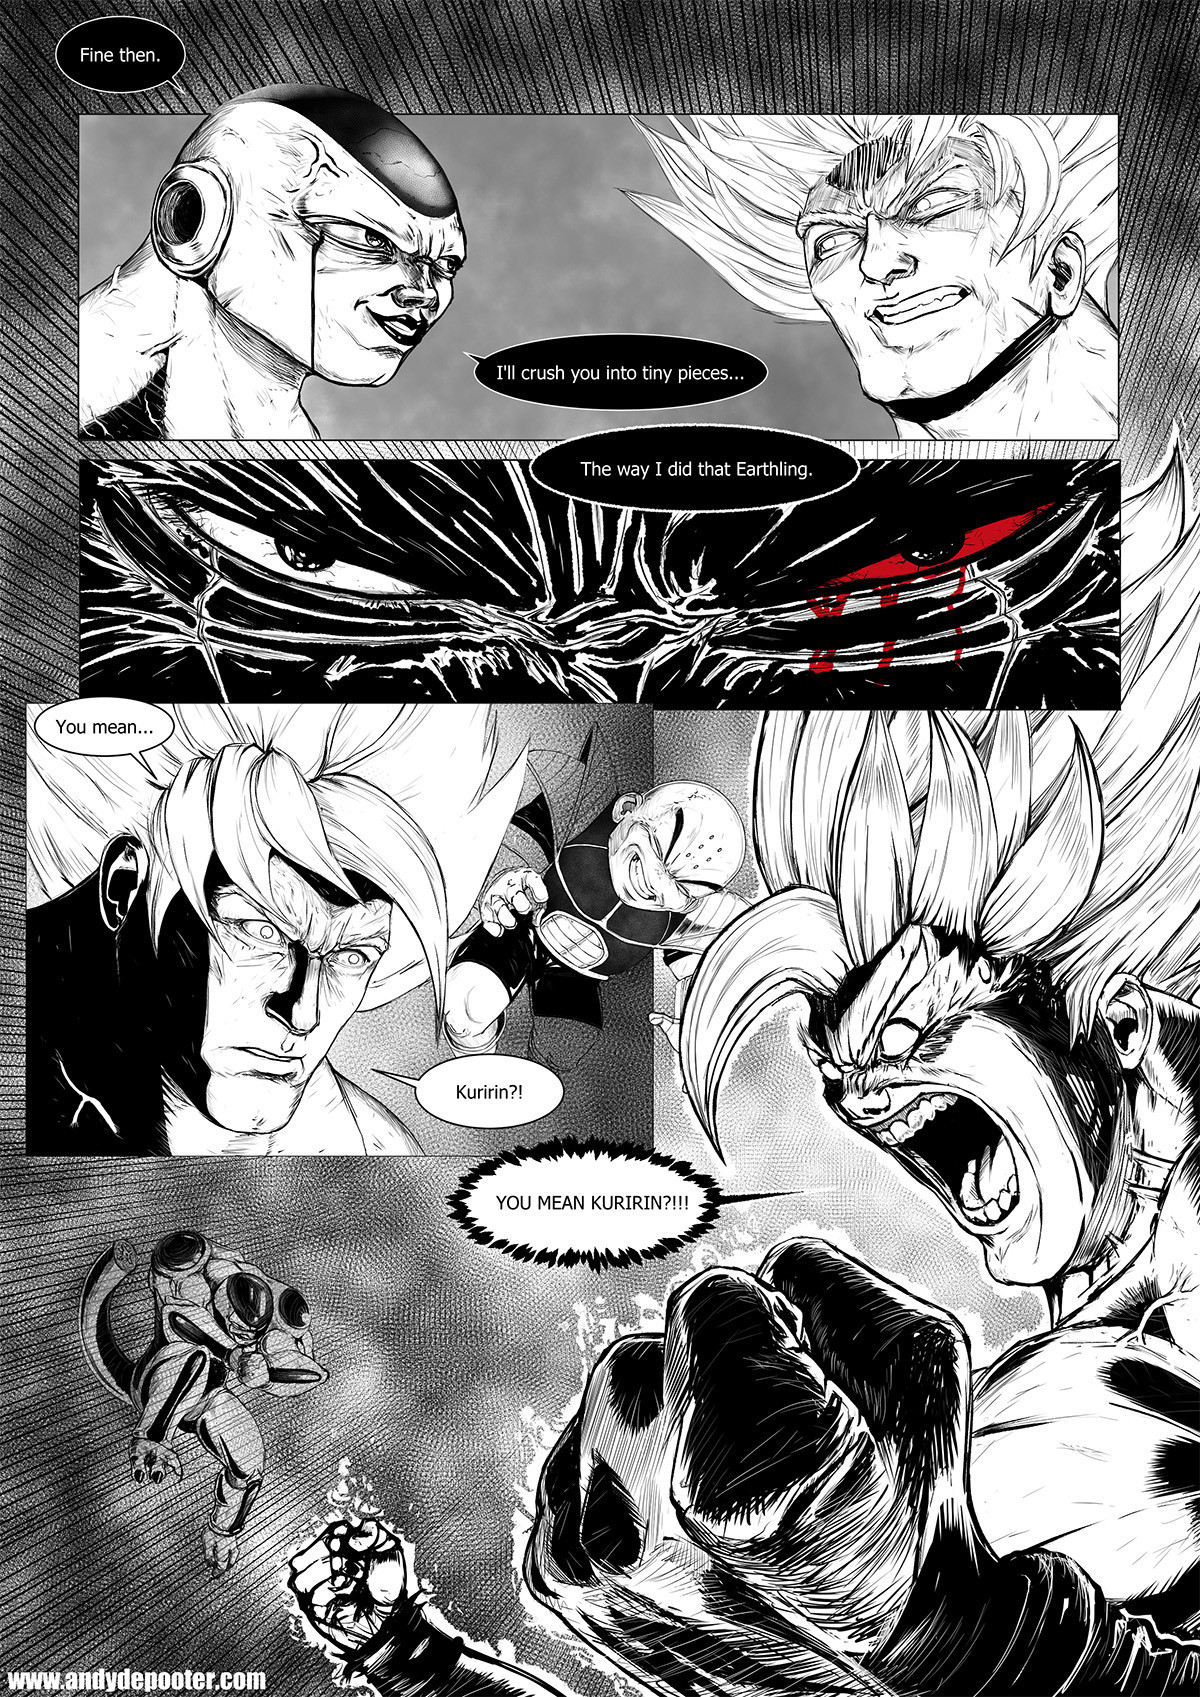 Artstation Drawing Dragon Ball Z Comics Son Goku Vs Frieza Andy De Pooter